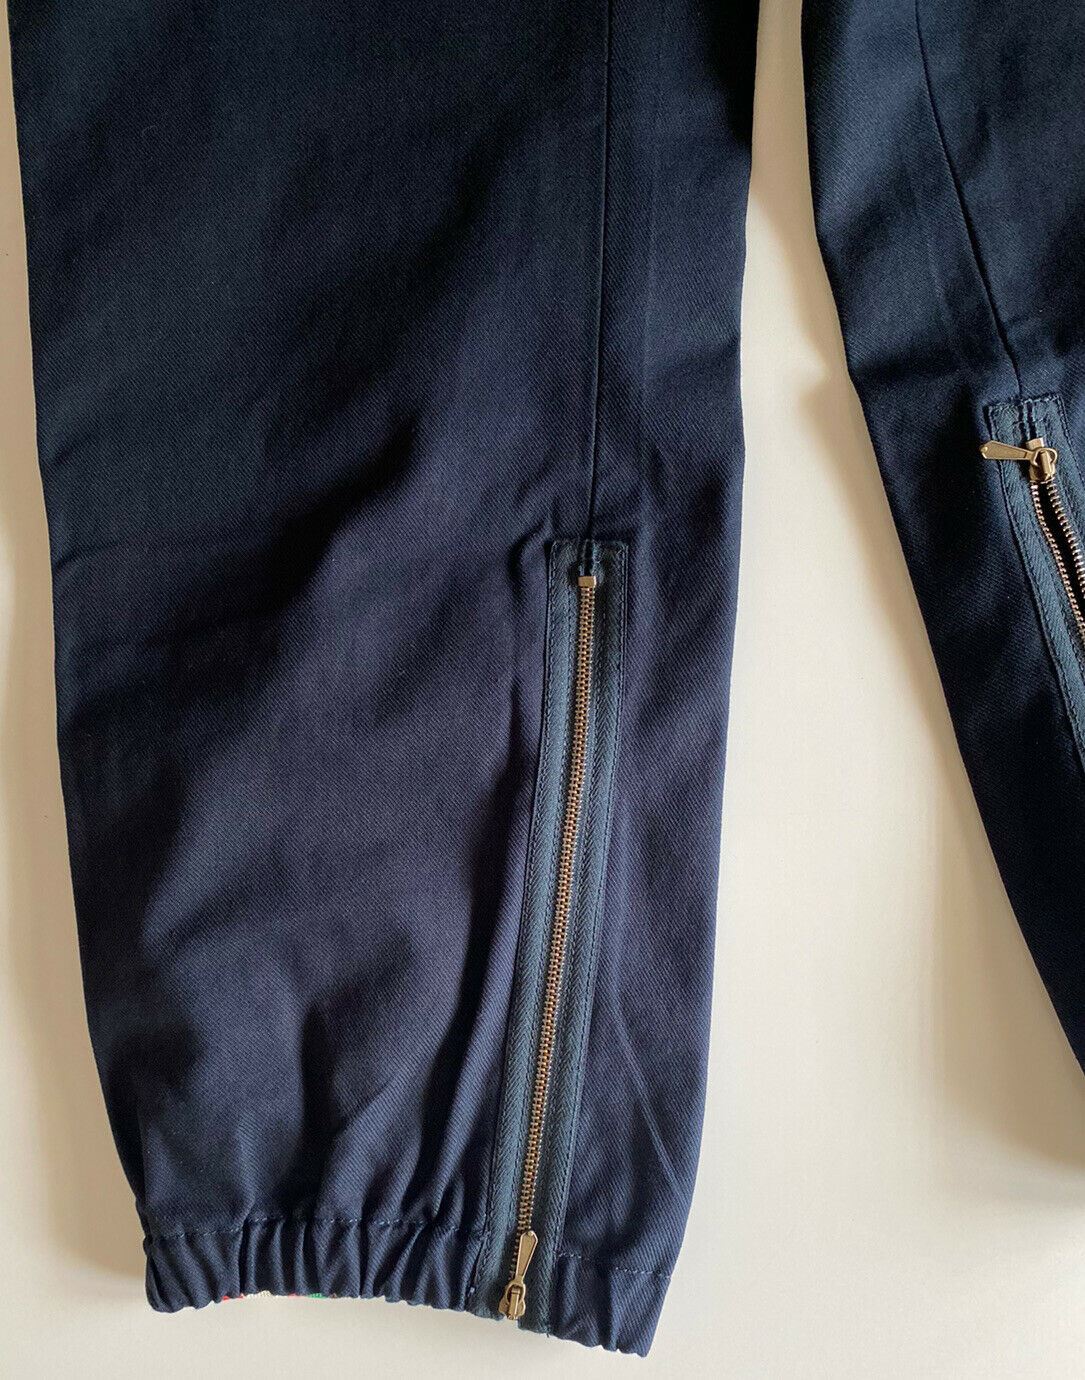 NWT $1100 Gucci Military Cotton Men’s Jogger Pants Night Blue 32 US (48 Euro)